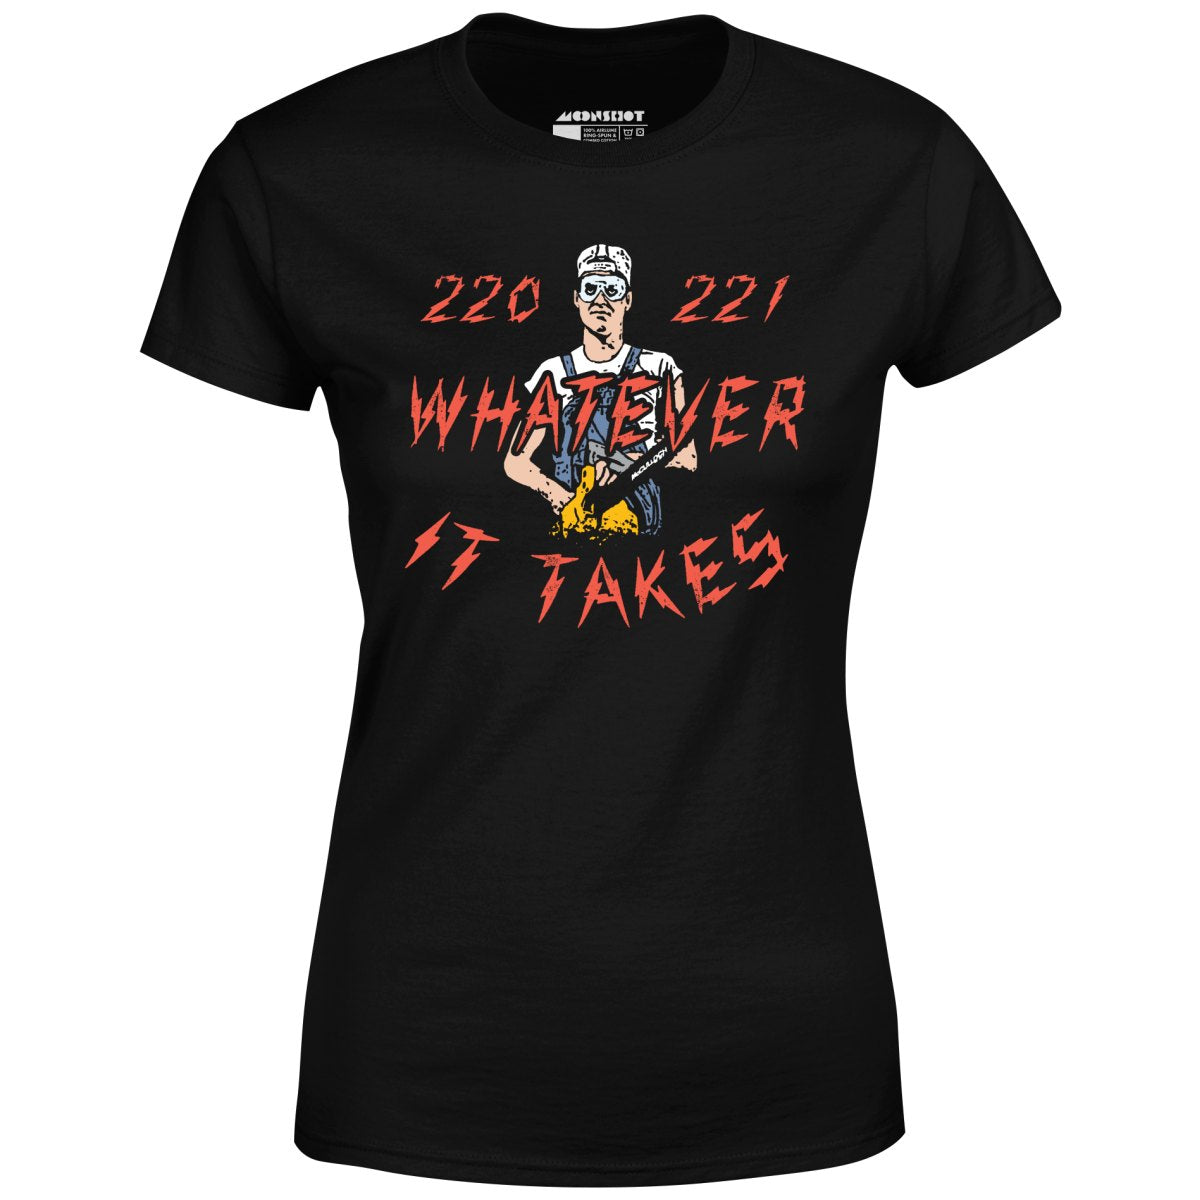 220 221 Whatever it Takes - Women's T-Shirt